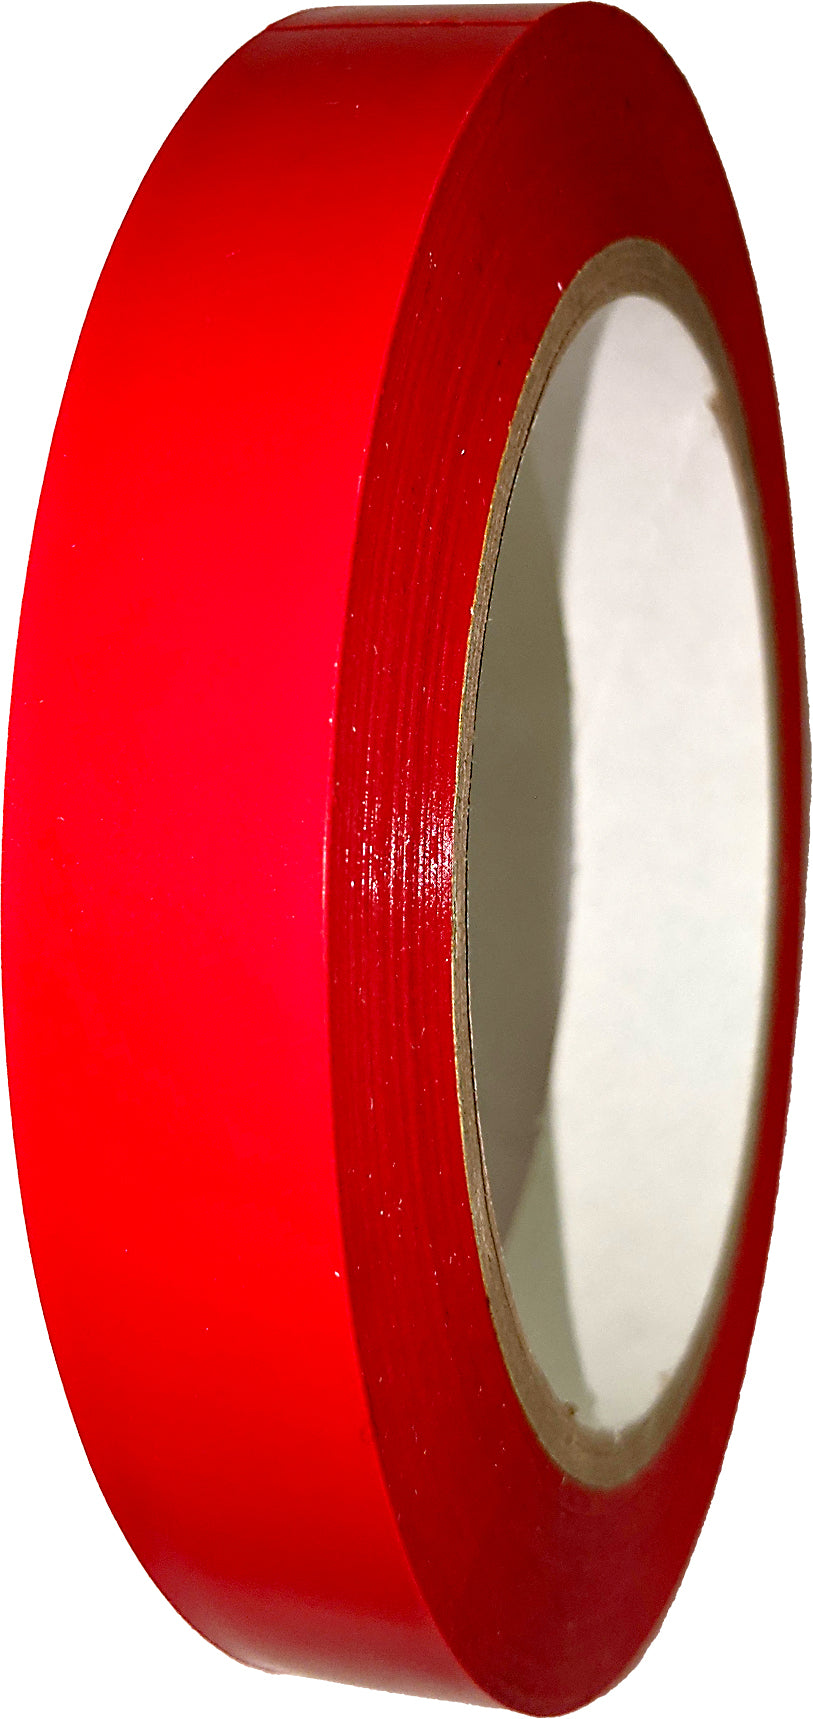 5 mil Red Vinyl Tape